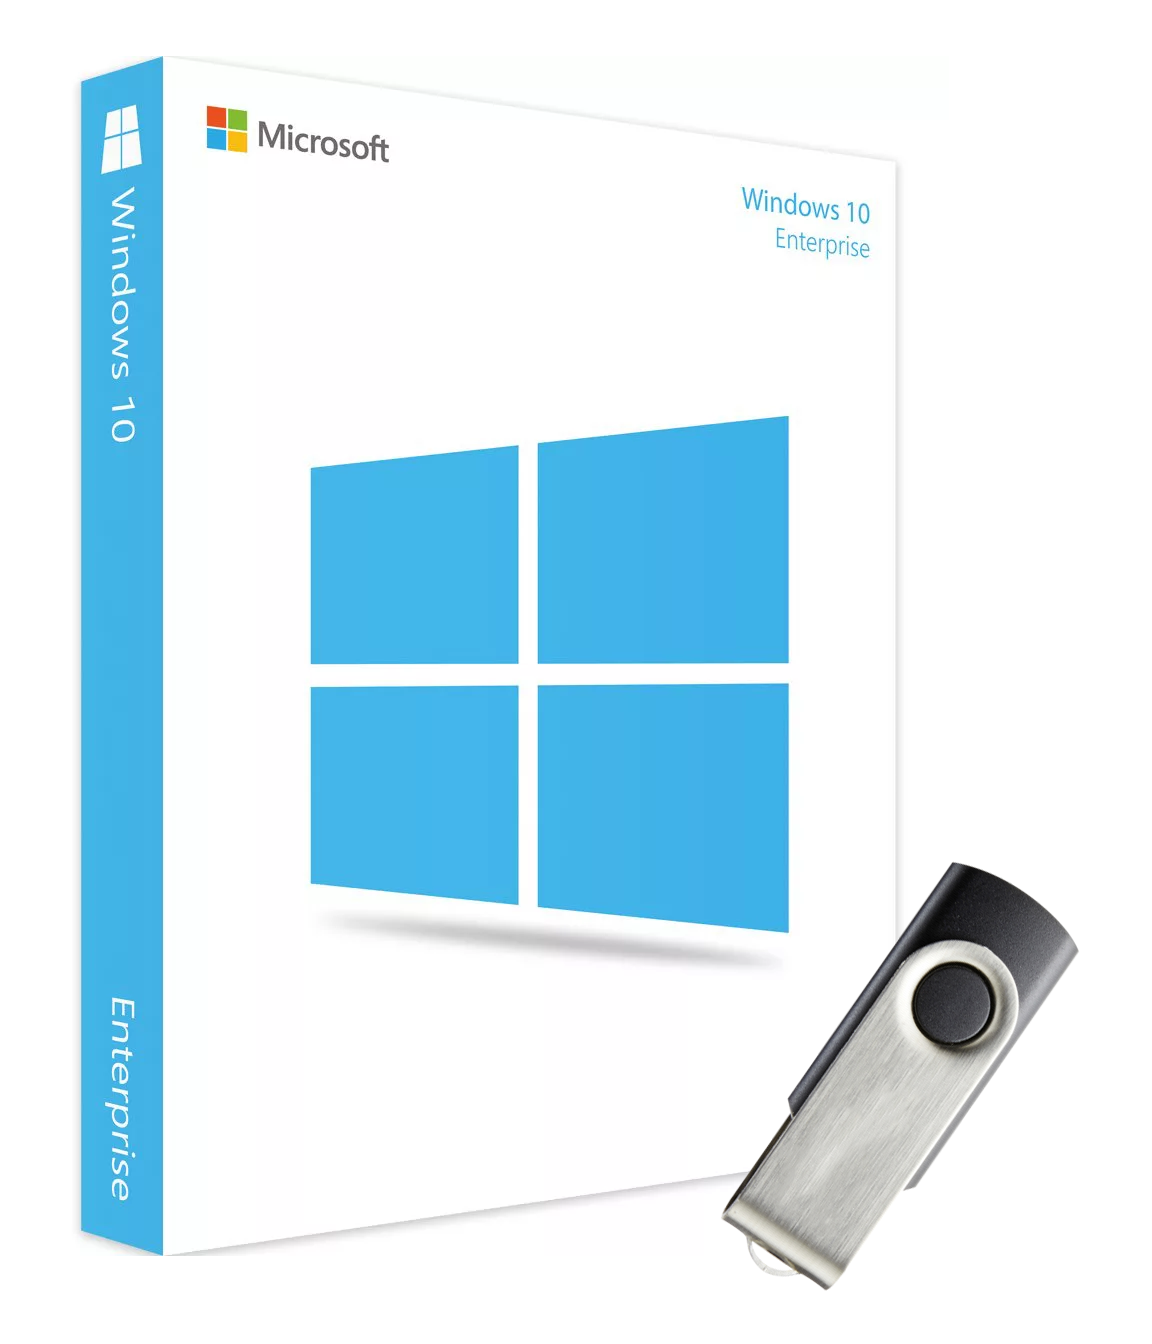 Microsoft Windows 10 Enterprise als USB-Stick